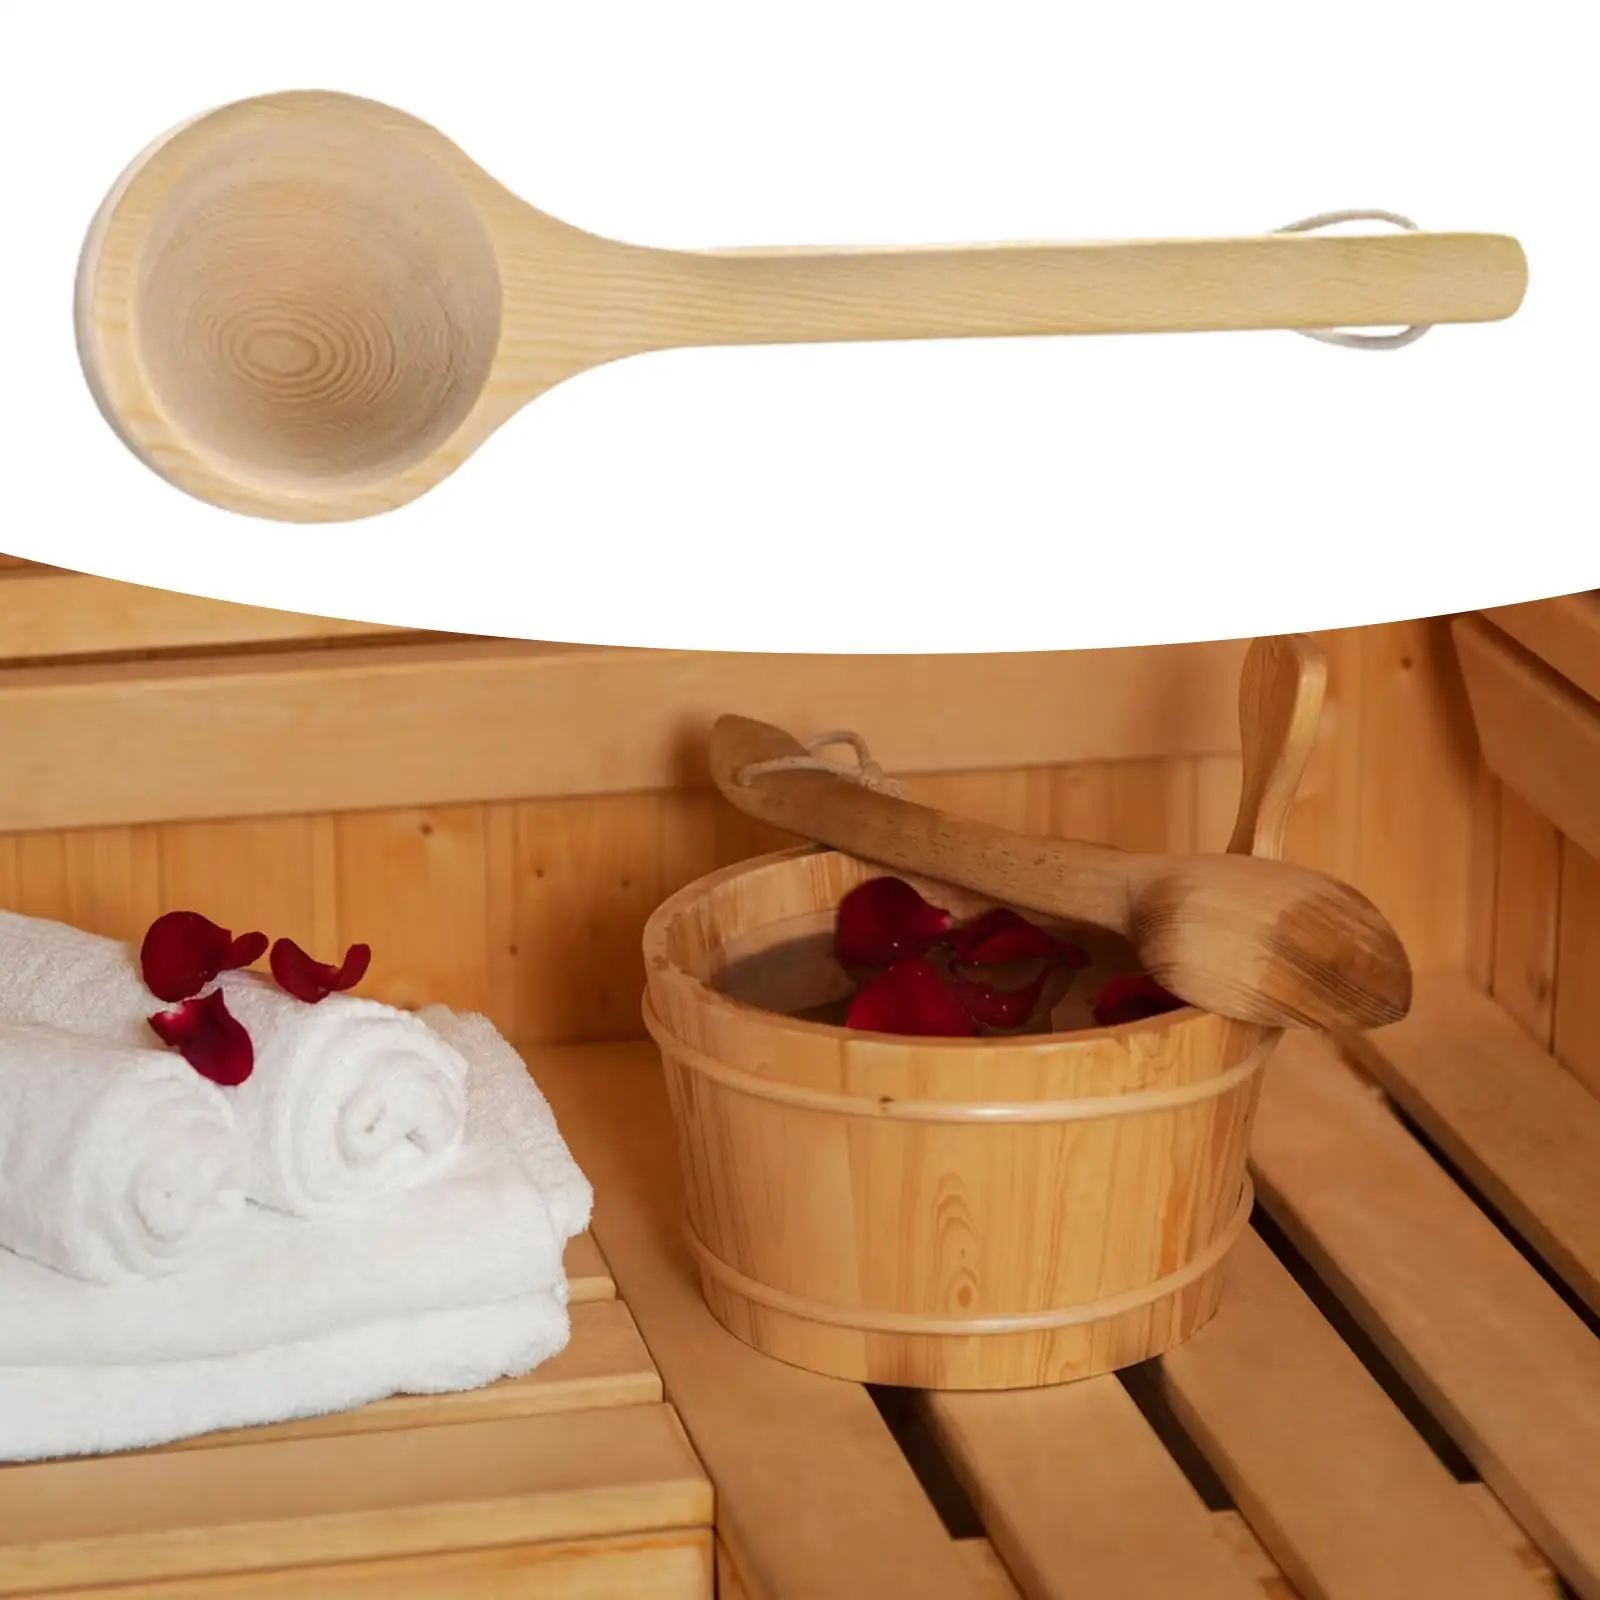 Spa Wooden Spoon Sauna Room Spa Accessory Wooden Bath Ladle for Bathtub Bathroom